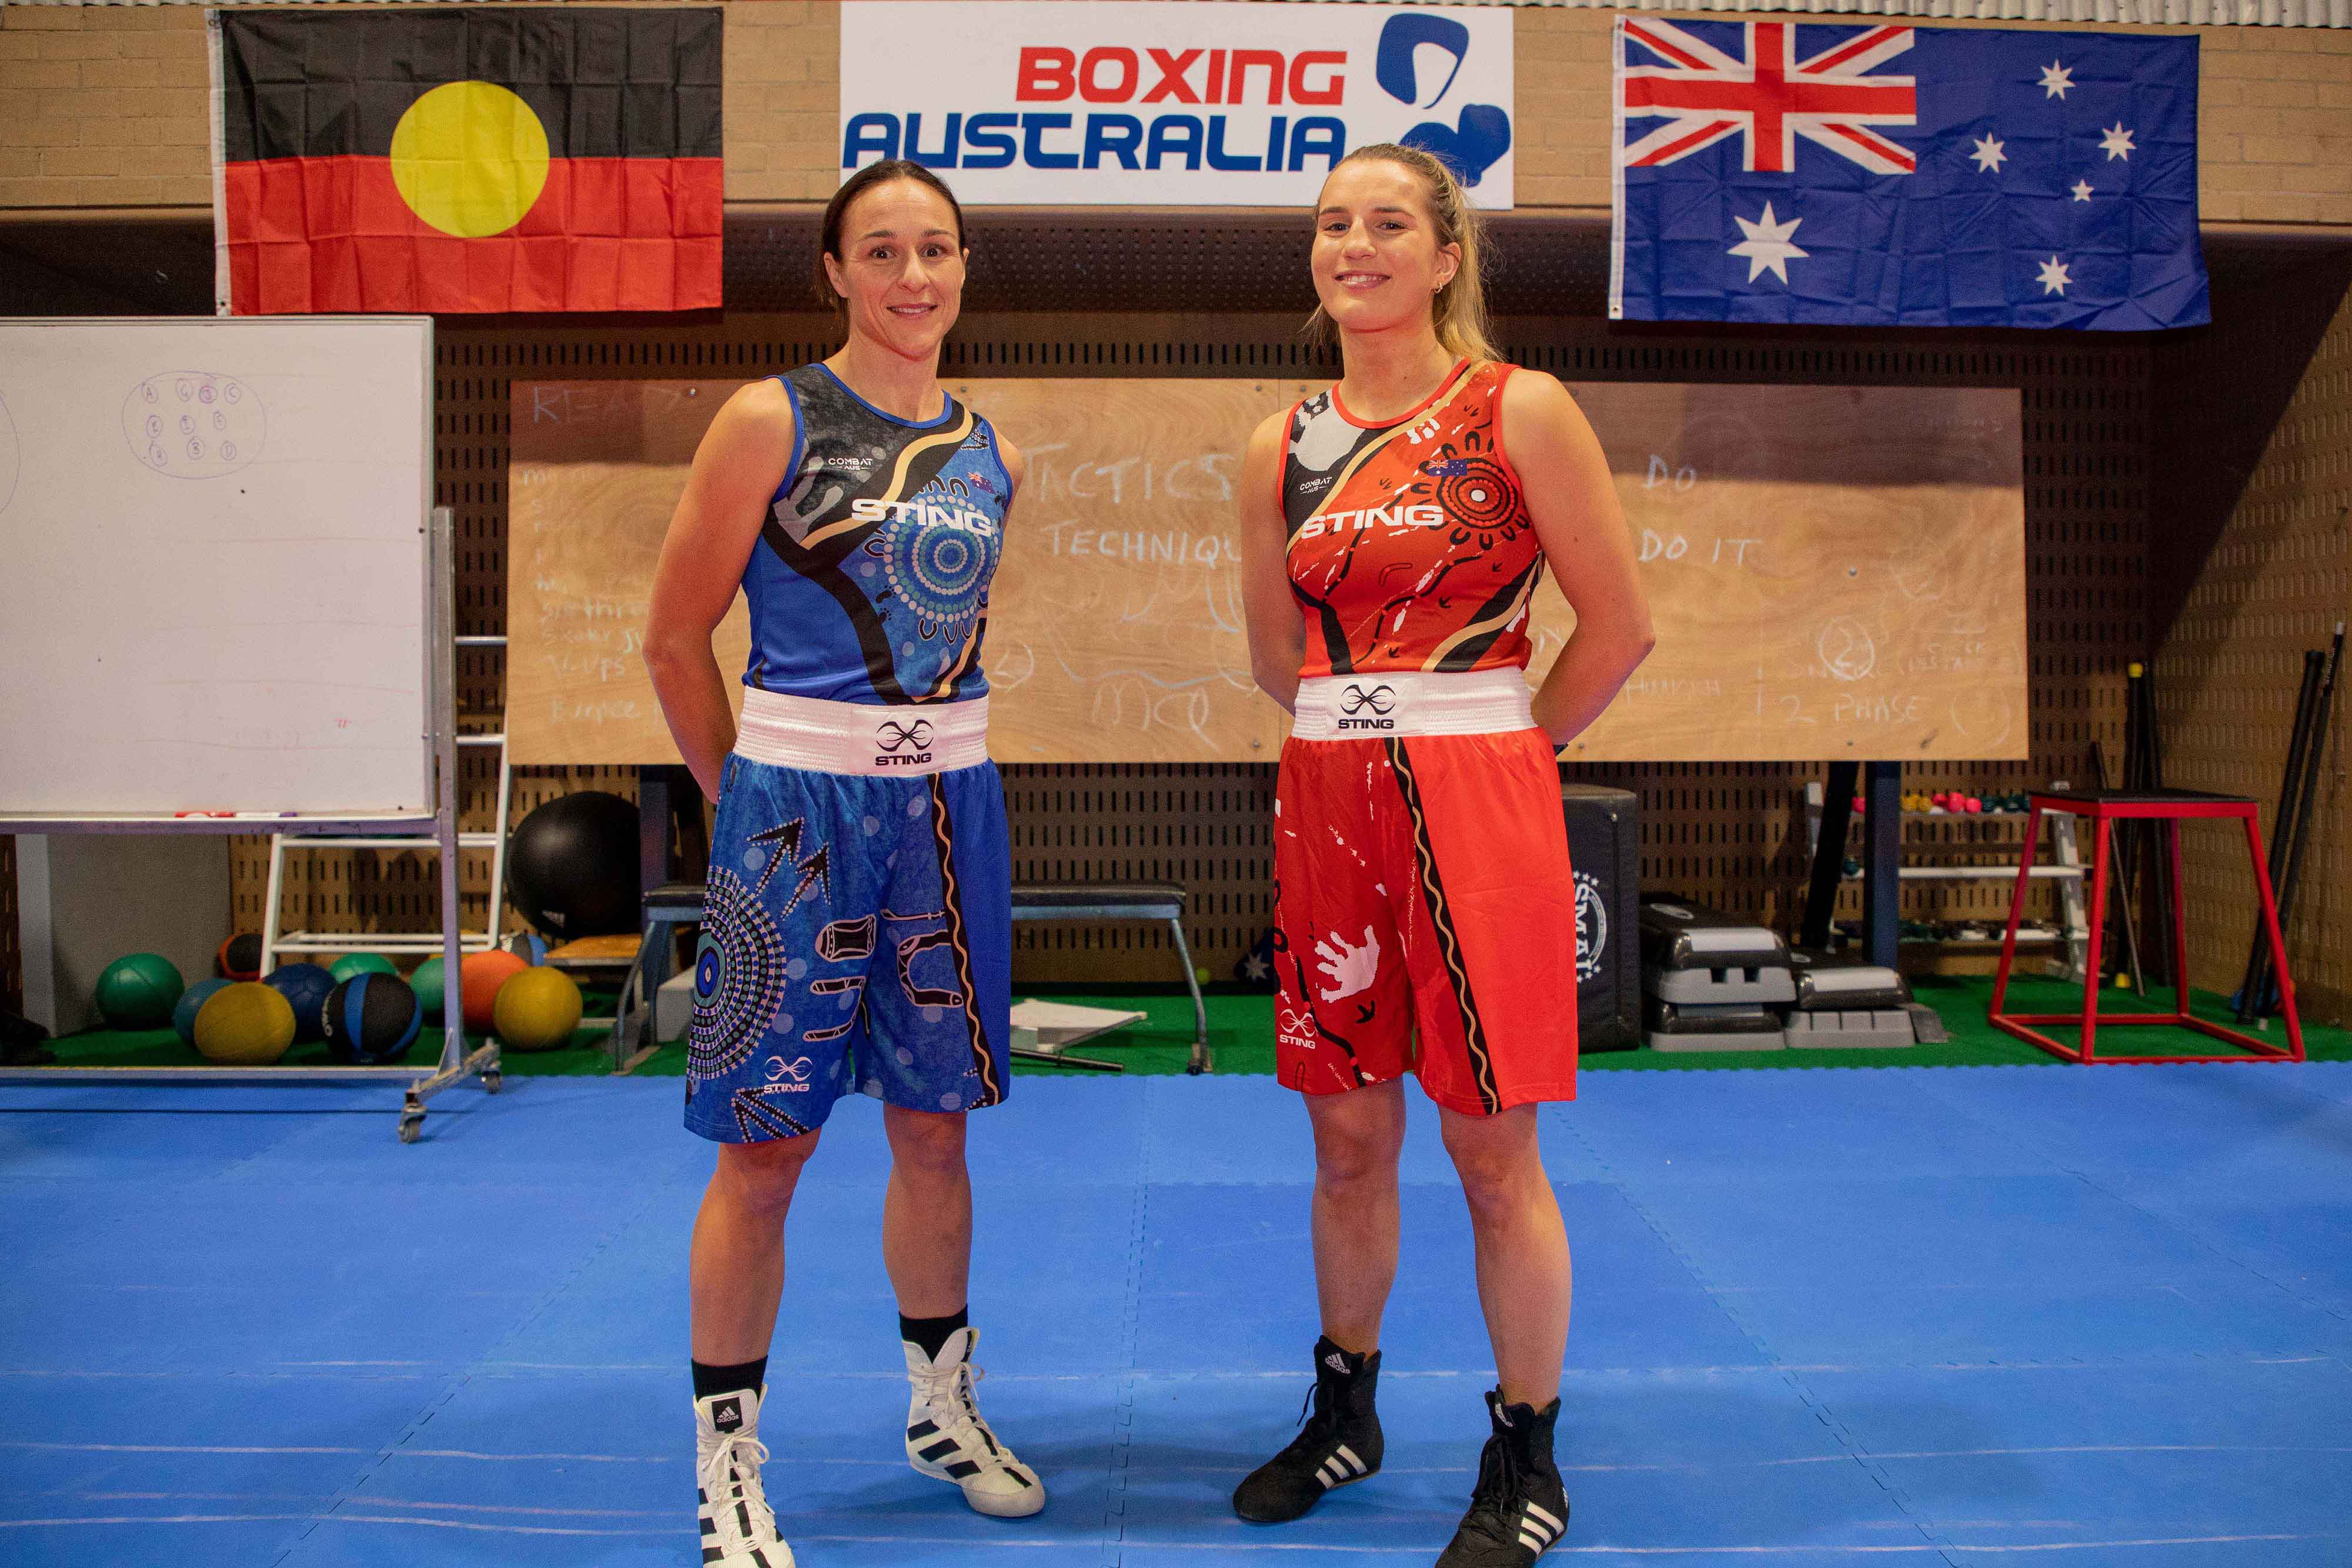 Boxing Australia's new uniforms